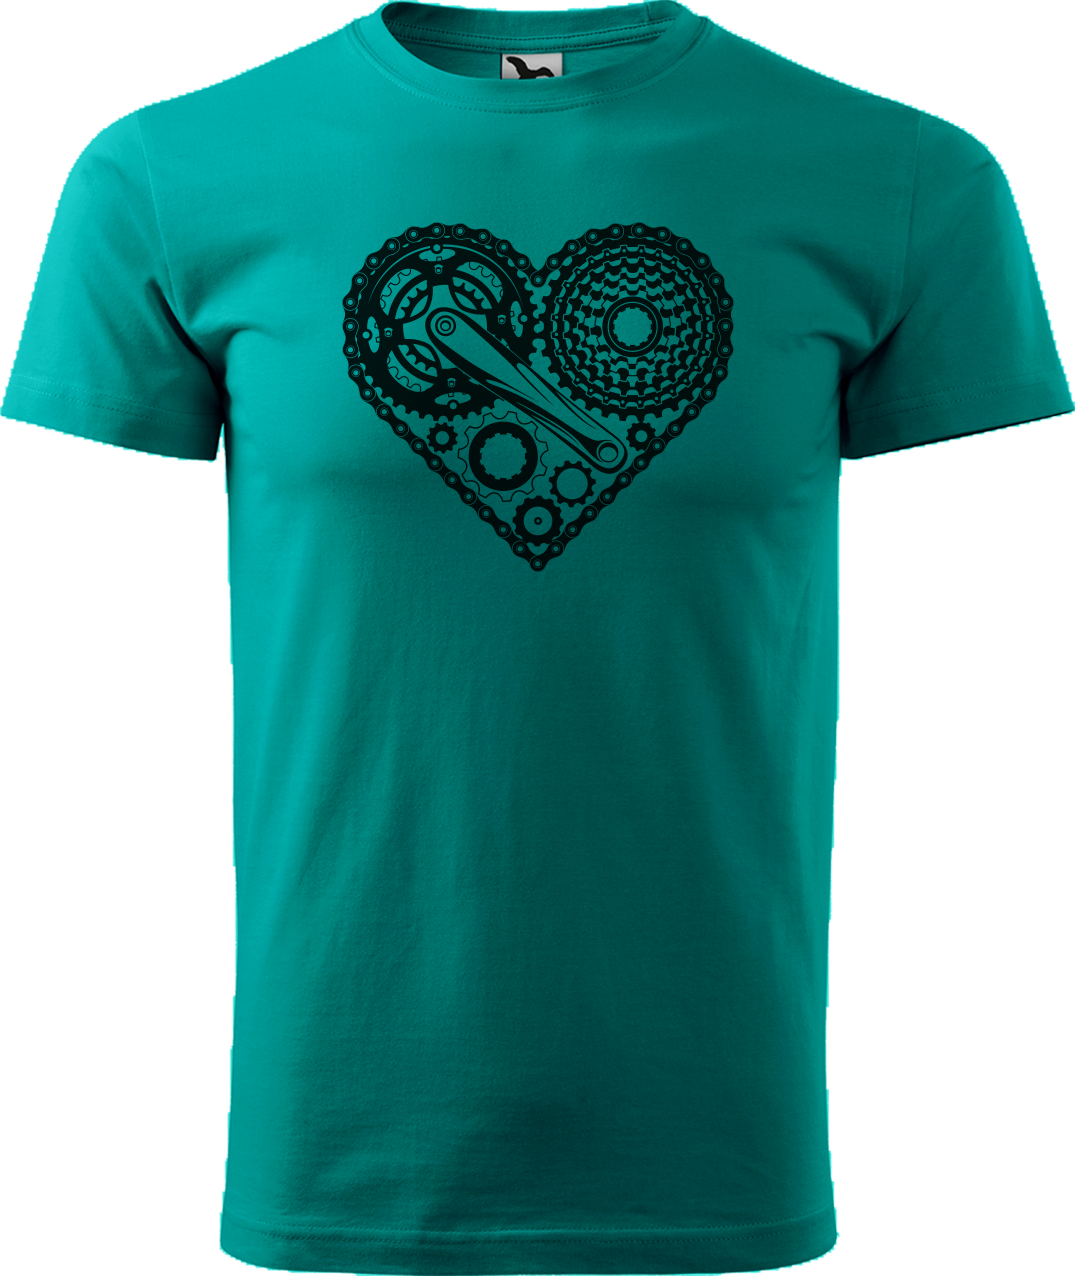 Pánské tričko pro cyklistu - Cyklosrdce Velikost: M, Barva: Emerald (19)